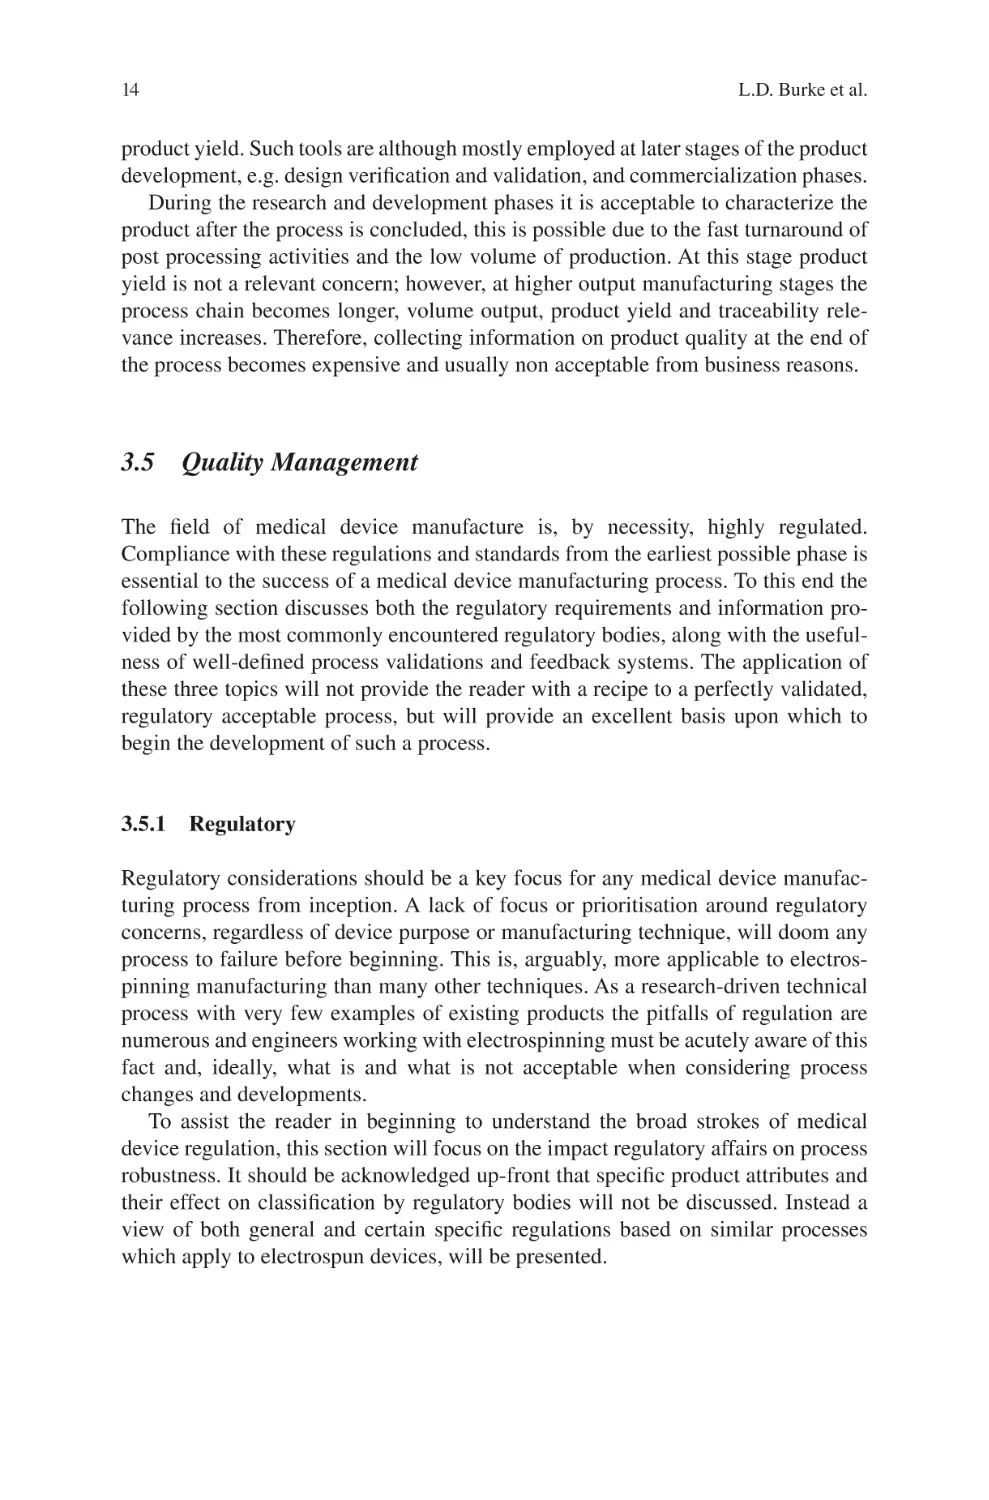 3.5 Quality Management
3.5.1 Regulatory